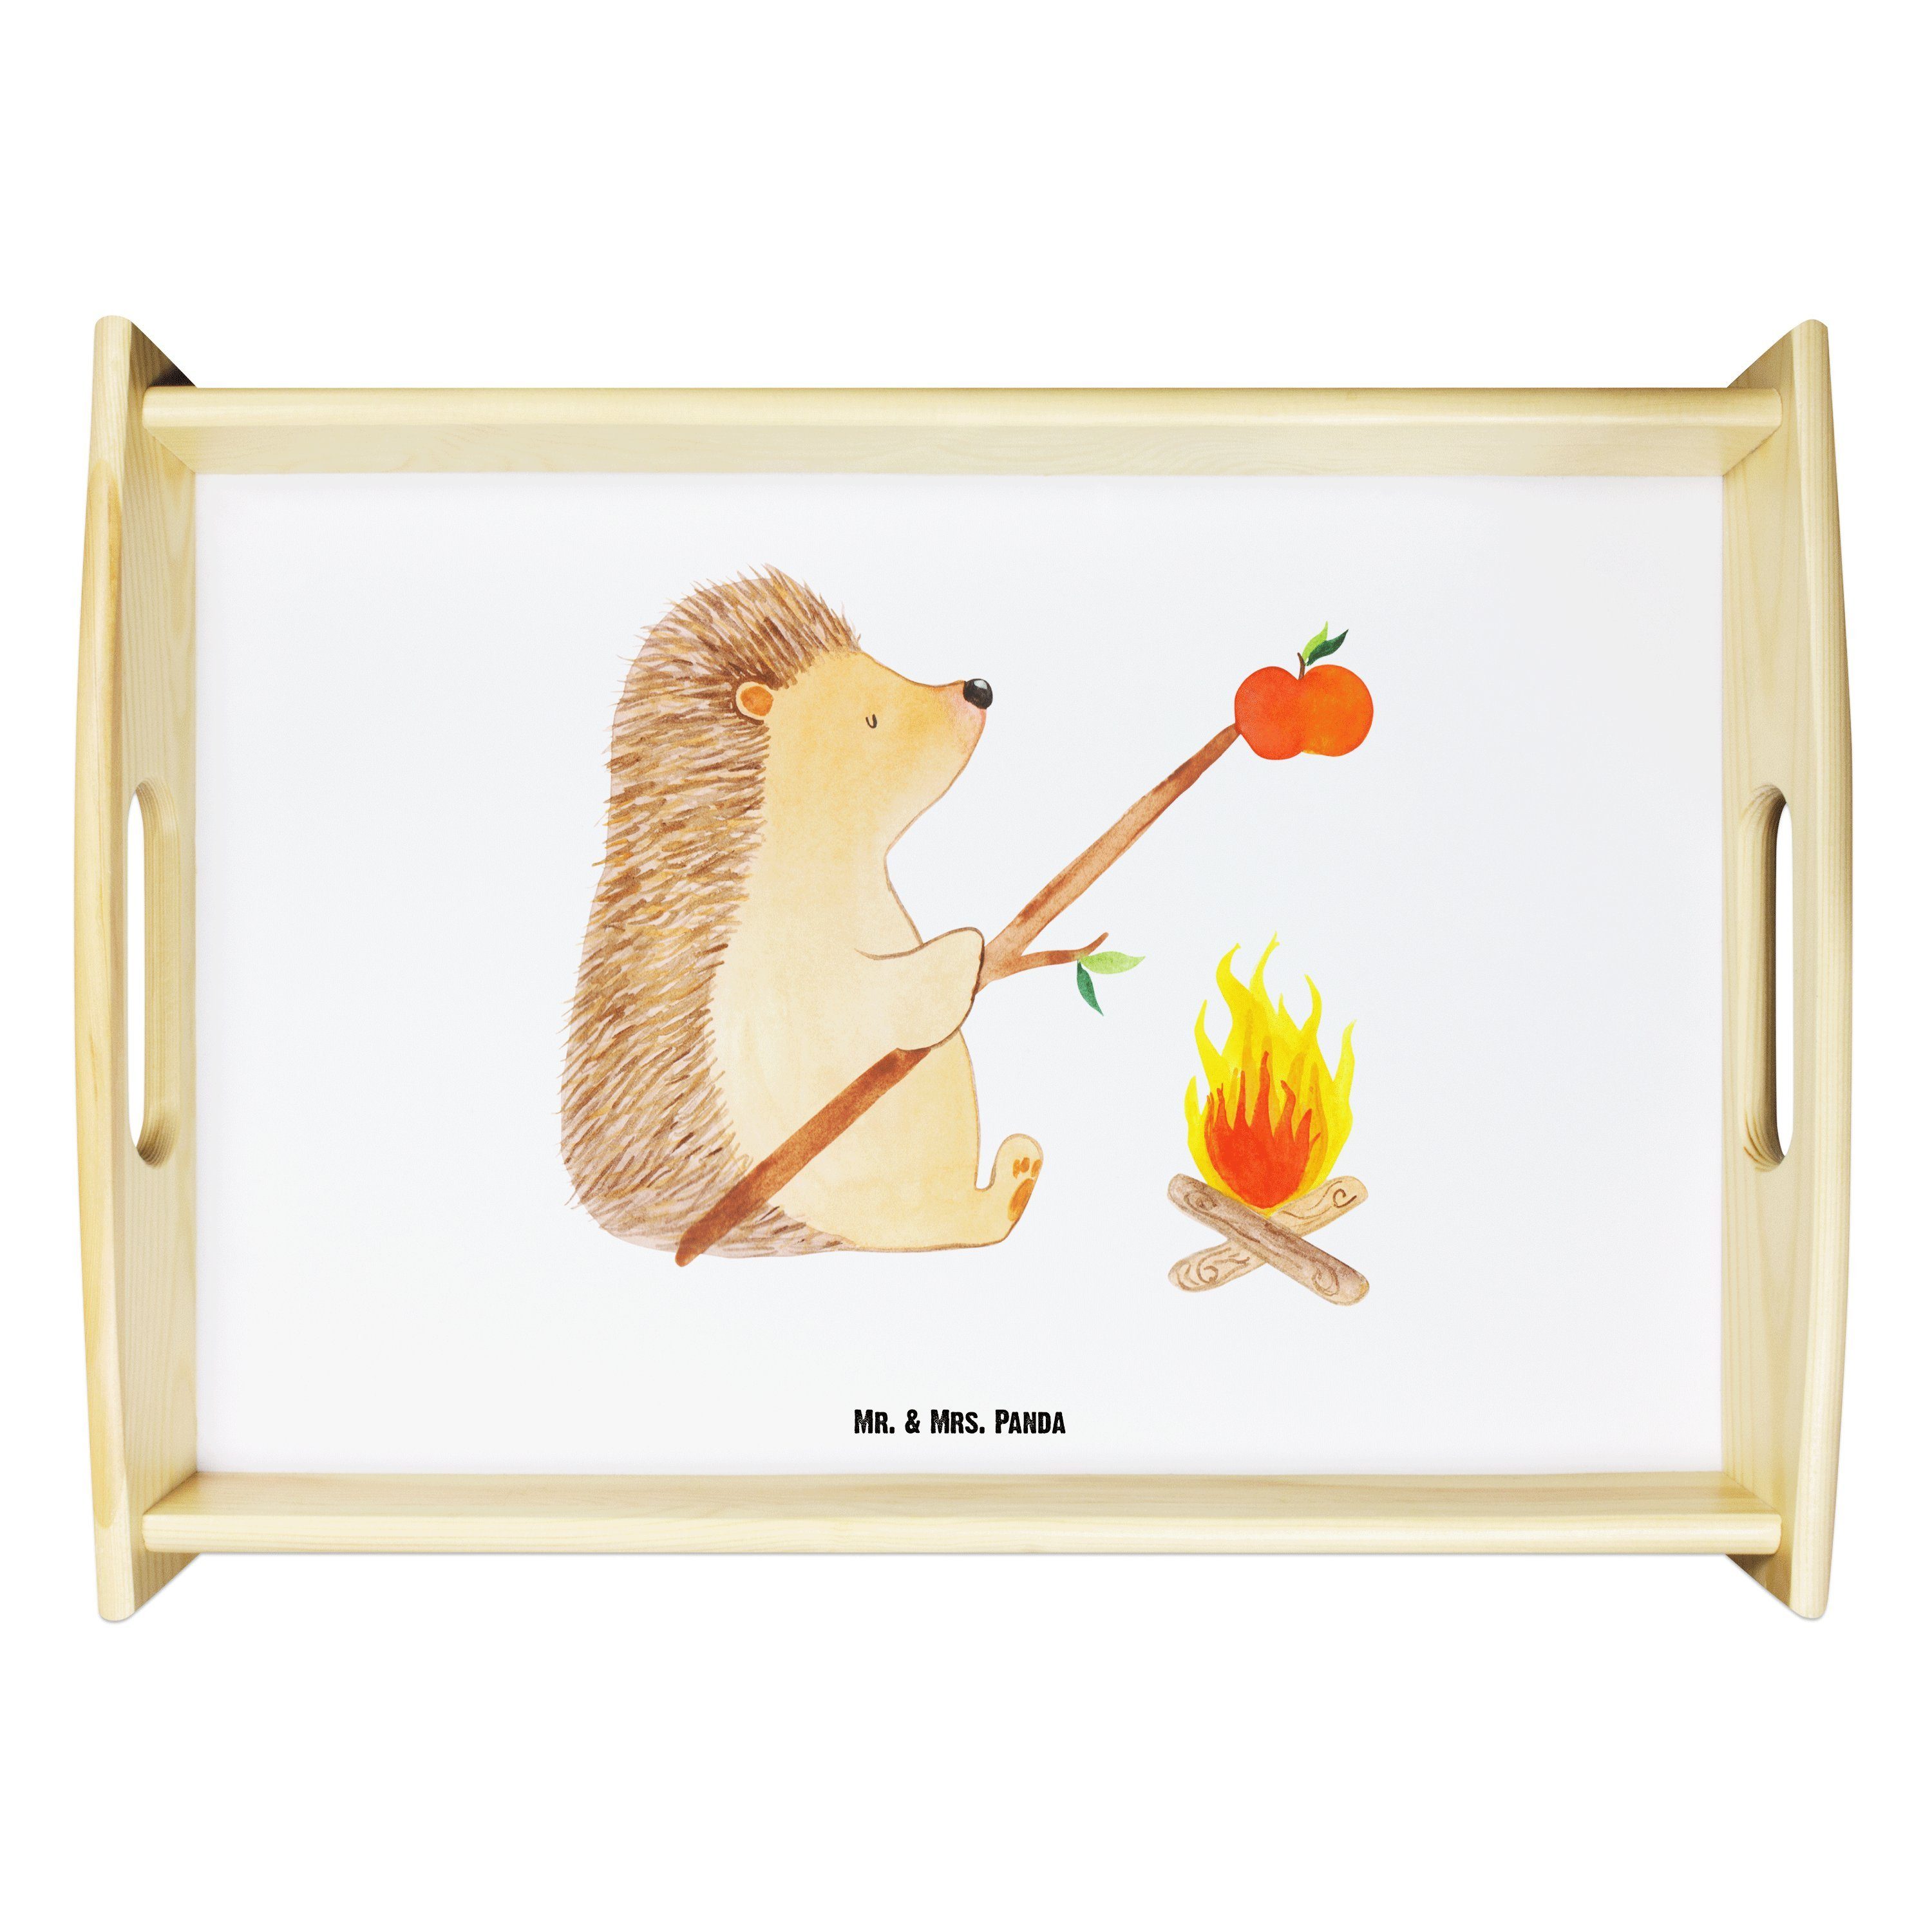 Mr. & Mrs. Panda Tablett Igel grillt - Weiß - Geschenk, Holztablett, arbeitslos, lustige Sprüc, Echtholz lasiert, (1-tlg)